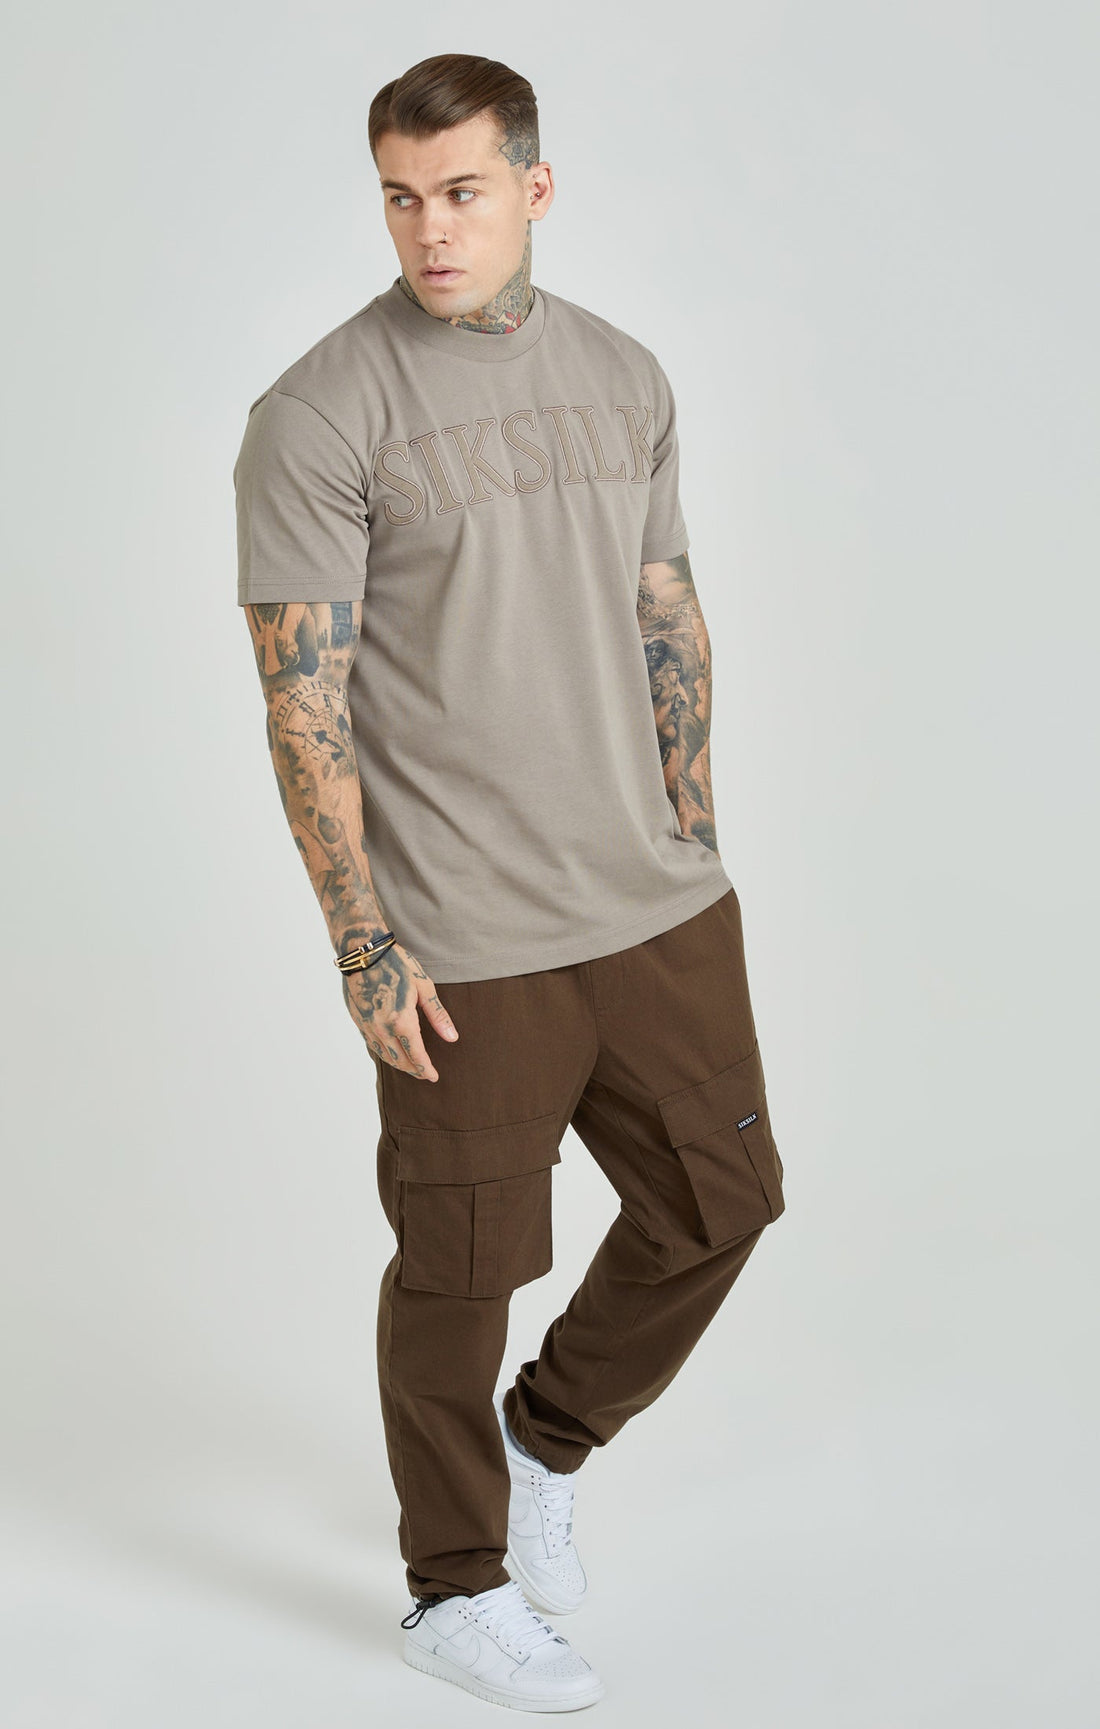 SikSilk - Brown Applique Logo Oversized Fit T-Shirt - Stayin